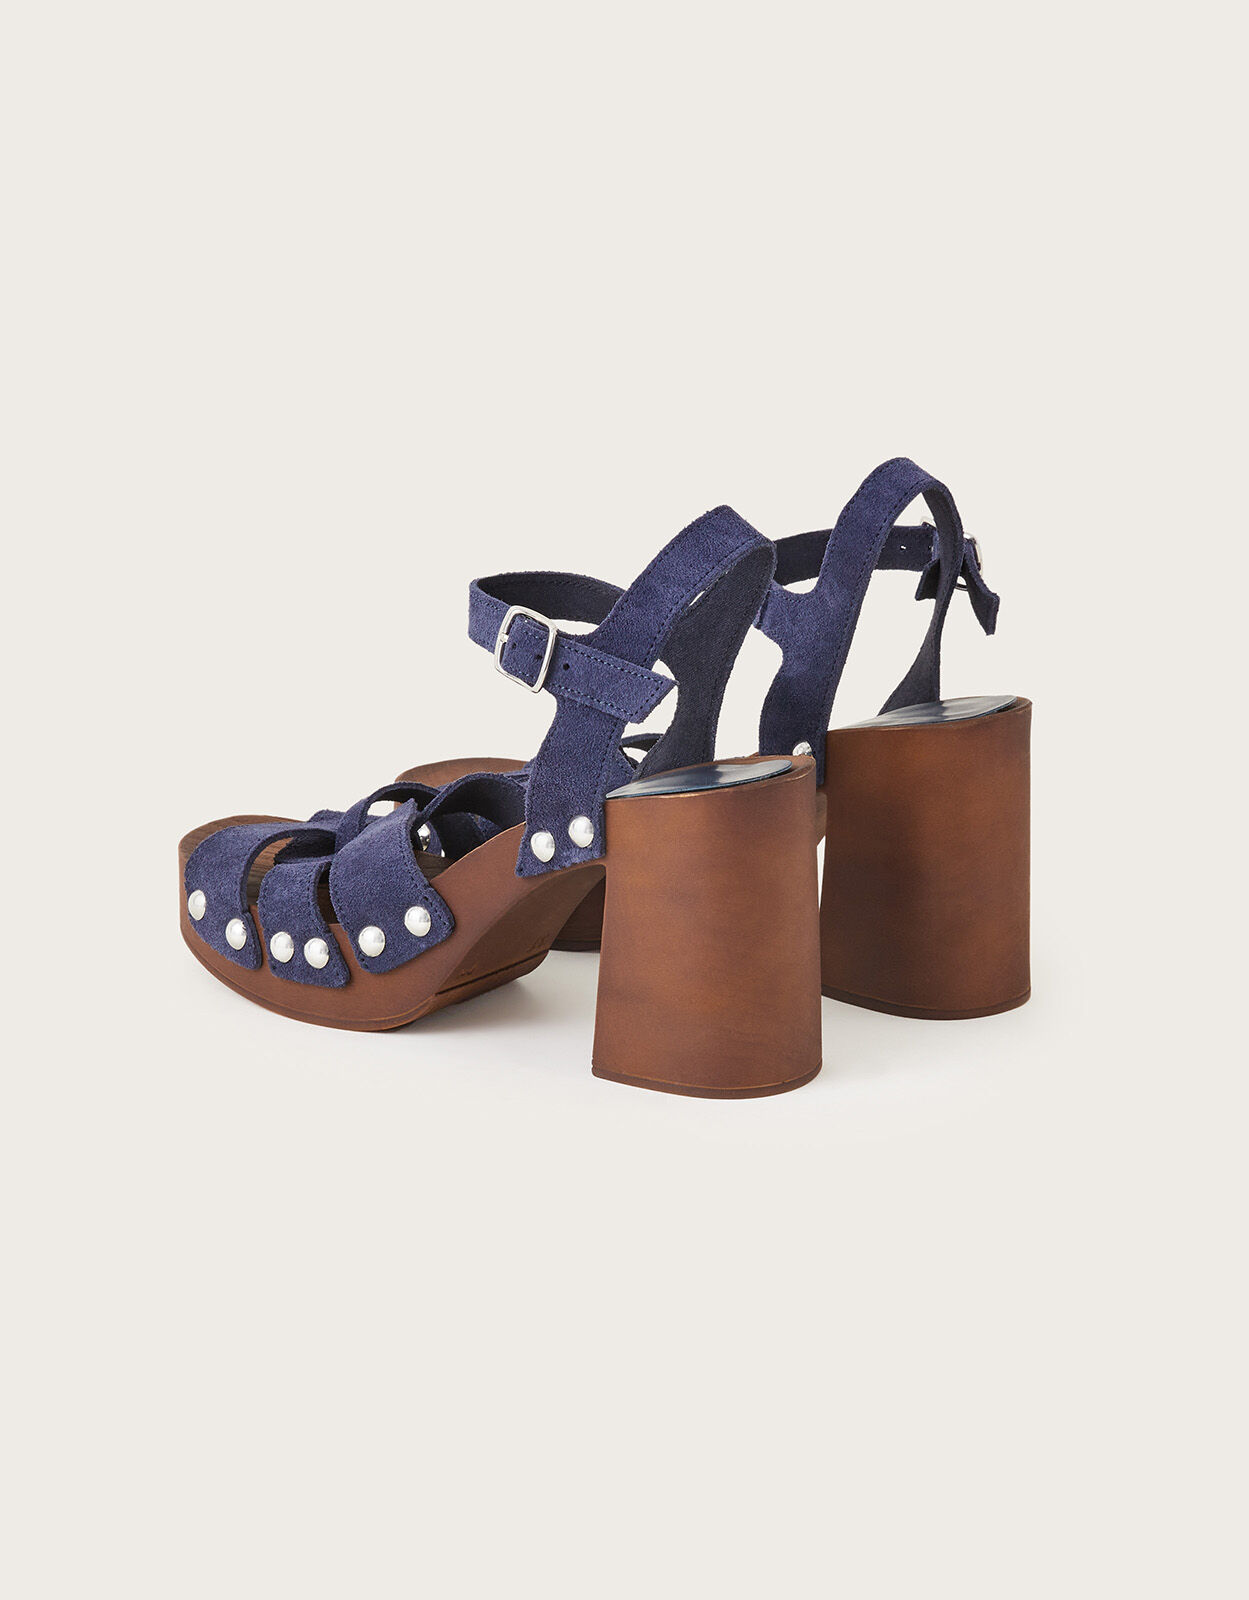 SANTA MONICA. Handmade Leather Clog Sandals – ELF